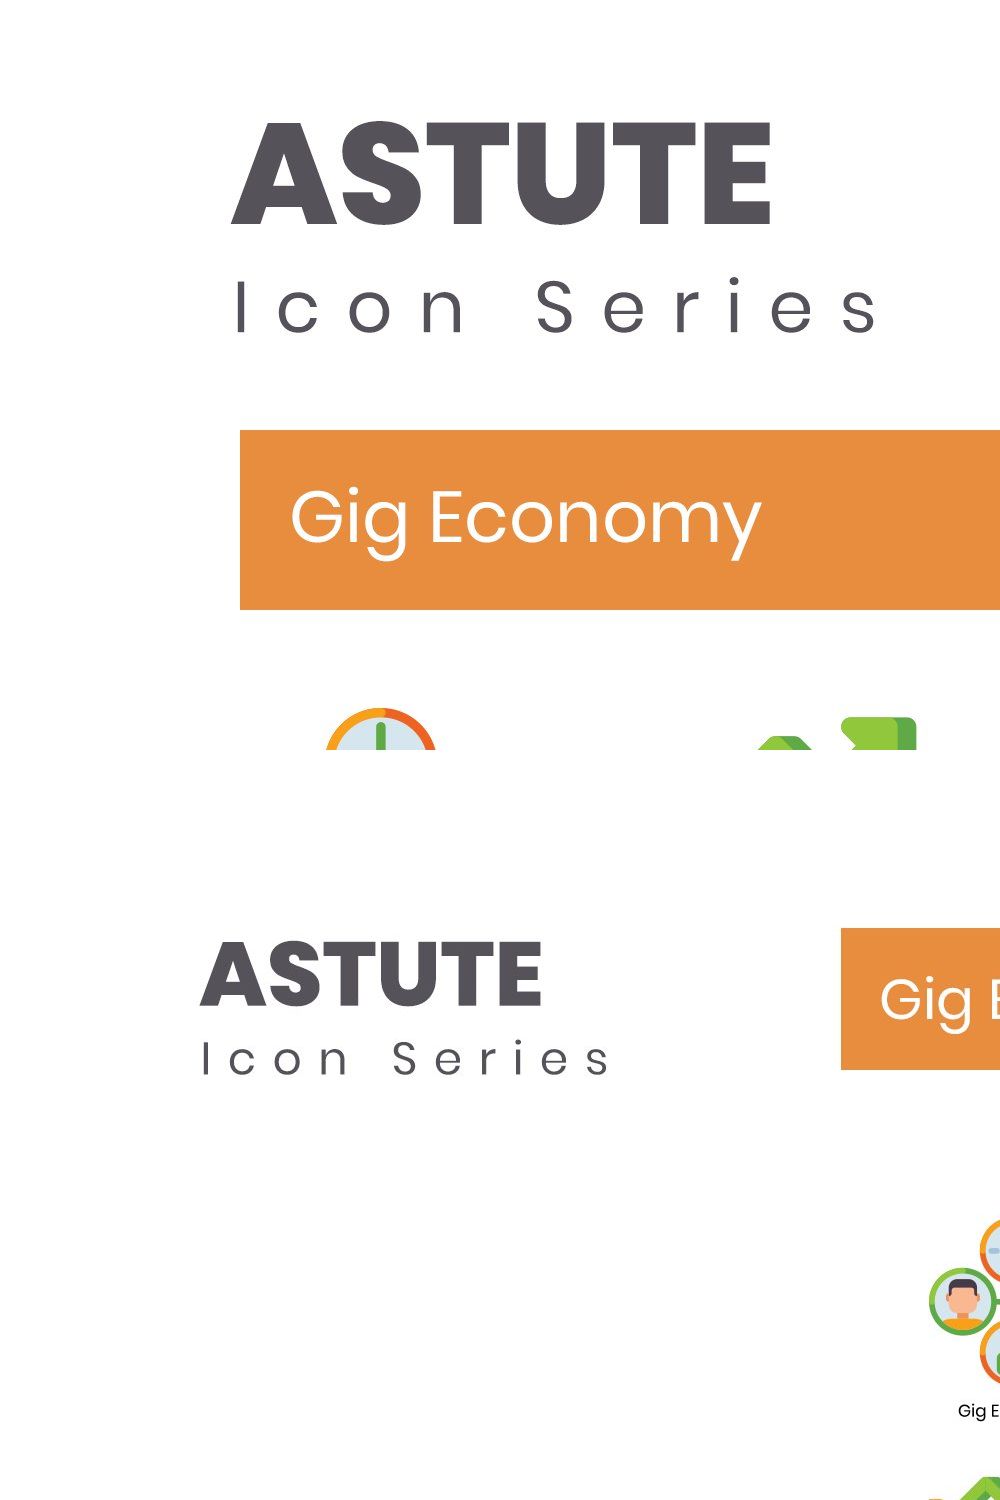 85 Gig Economy Icons | Astute pinterest preview image.